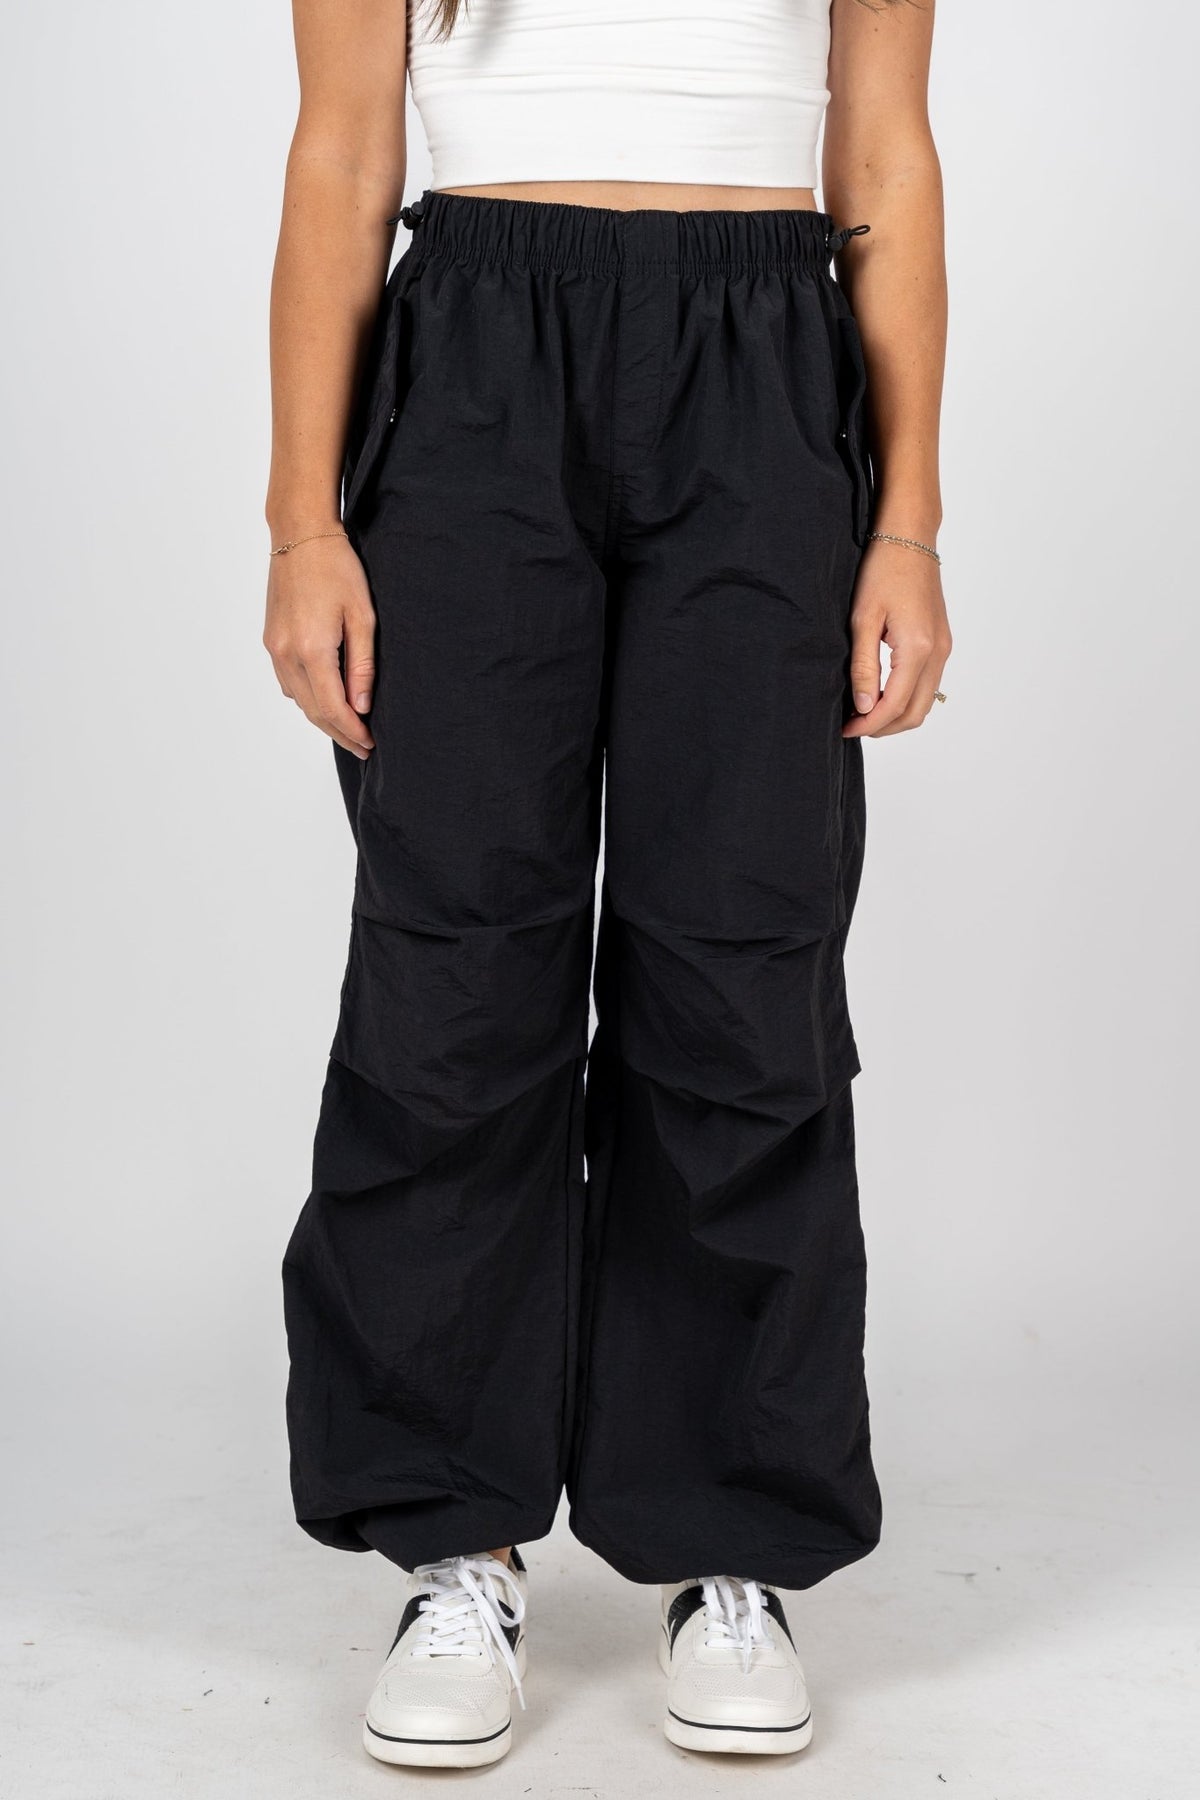 Ruched cargo pants black | Lush Fashion Lounge: women's boutique pants, boutique women's pants, affordable boutique pants, women's fashion pants